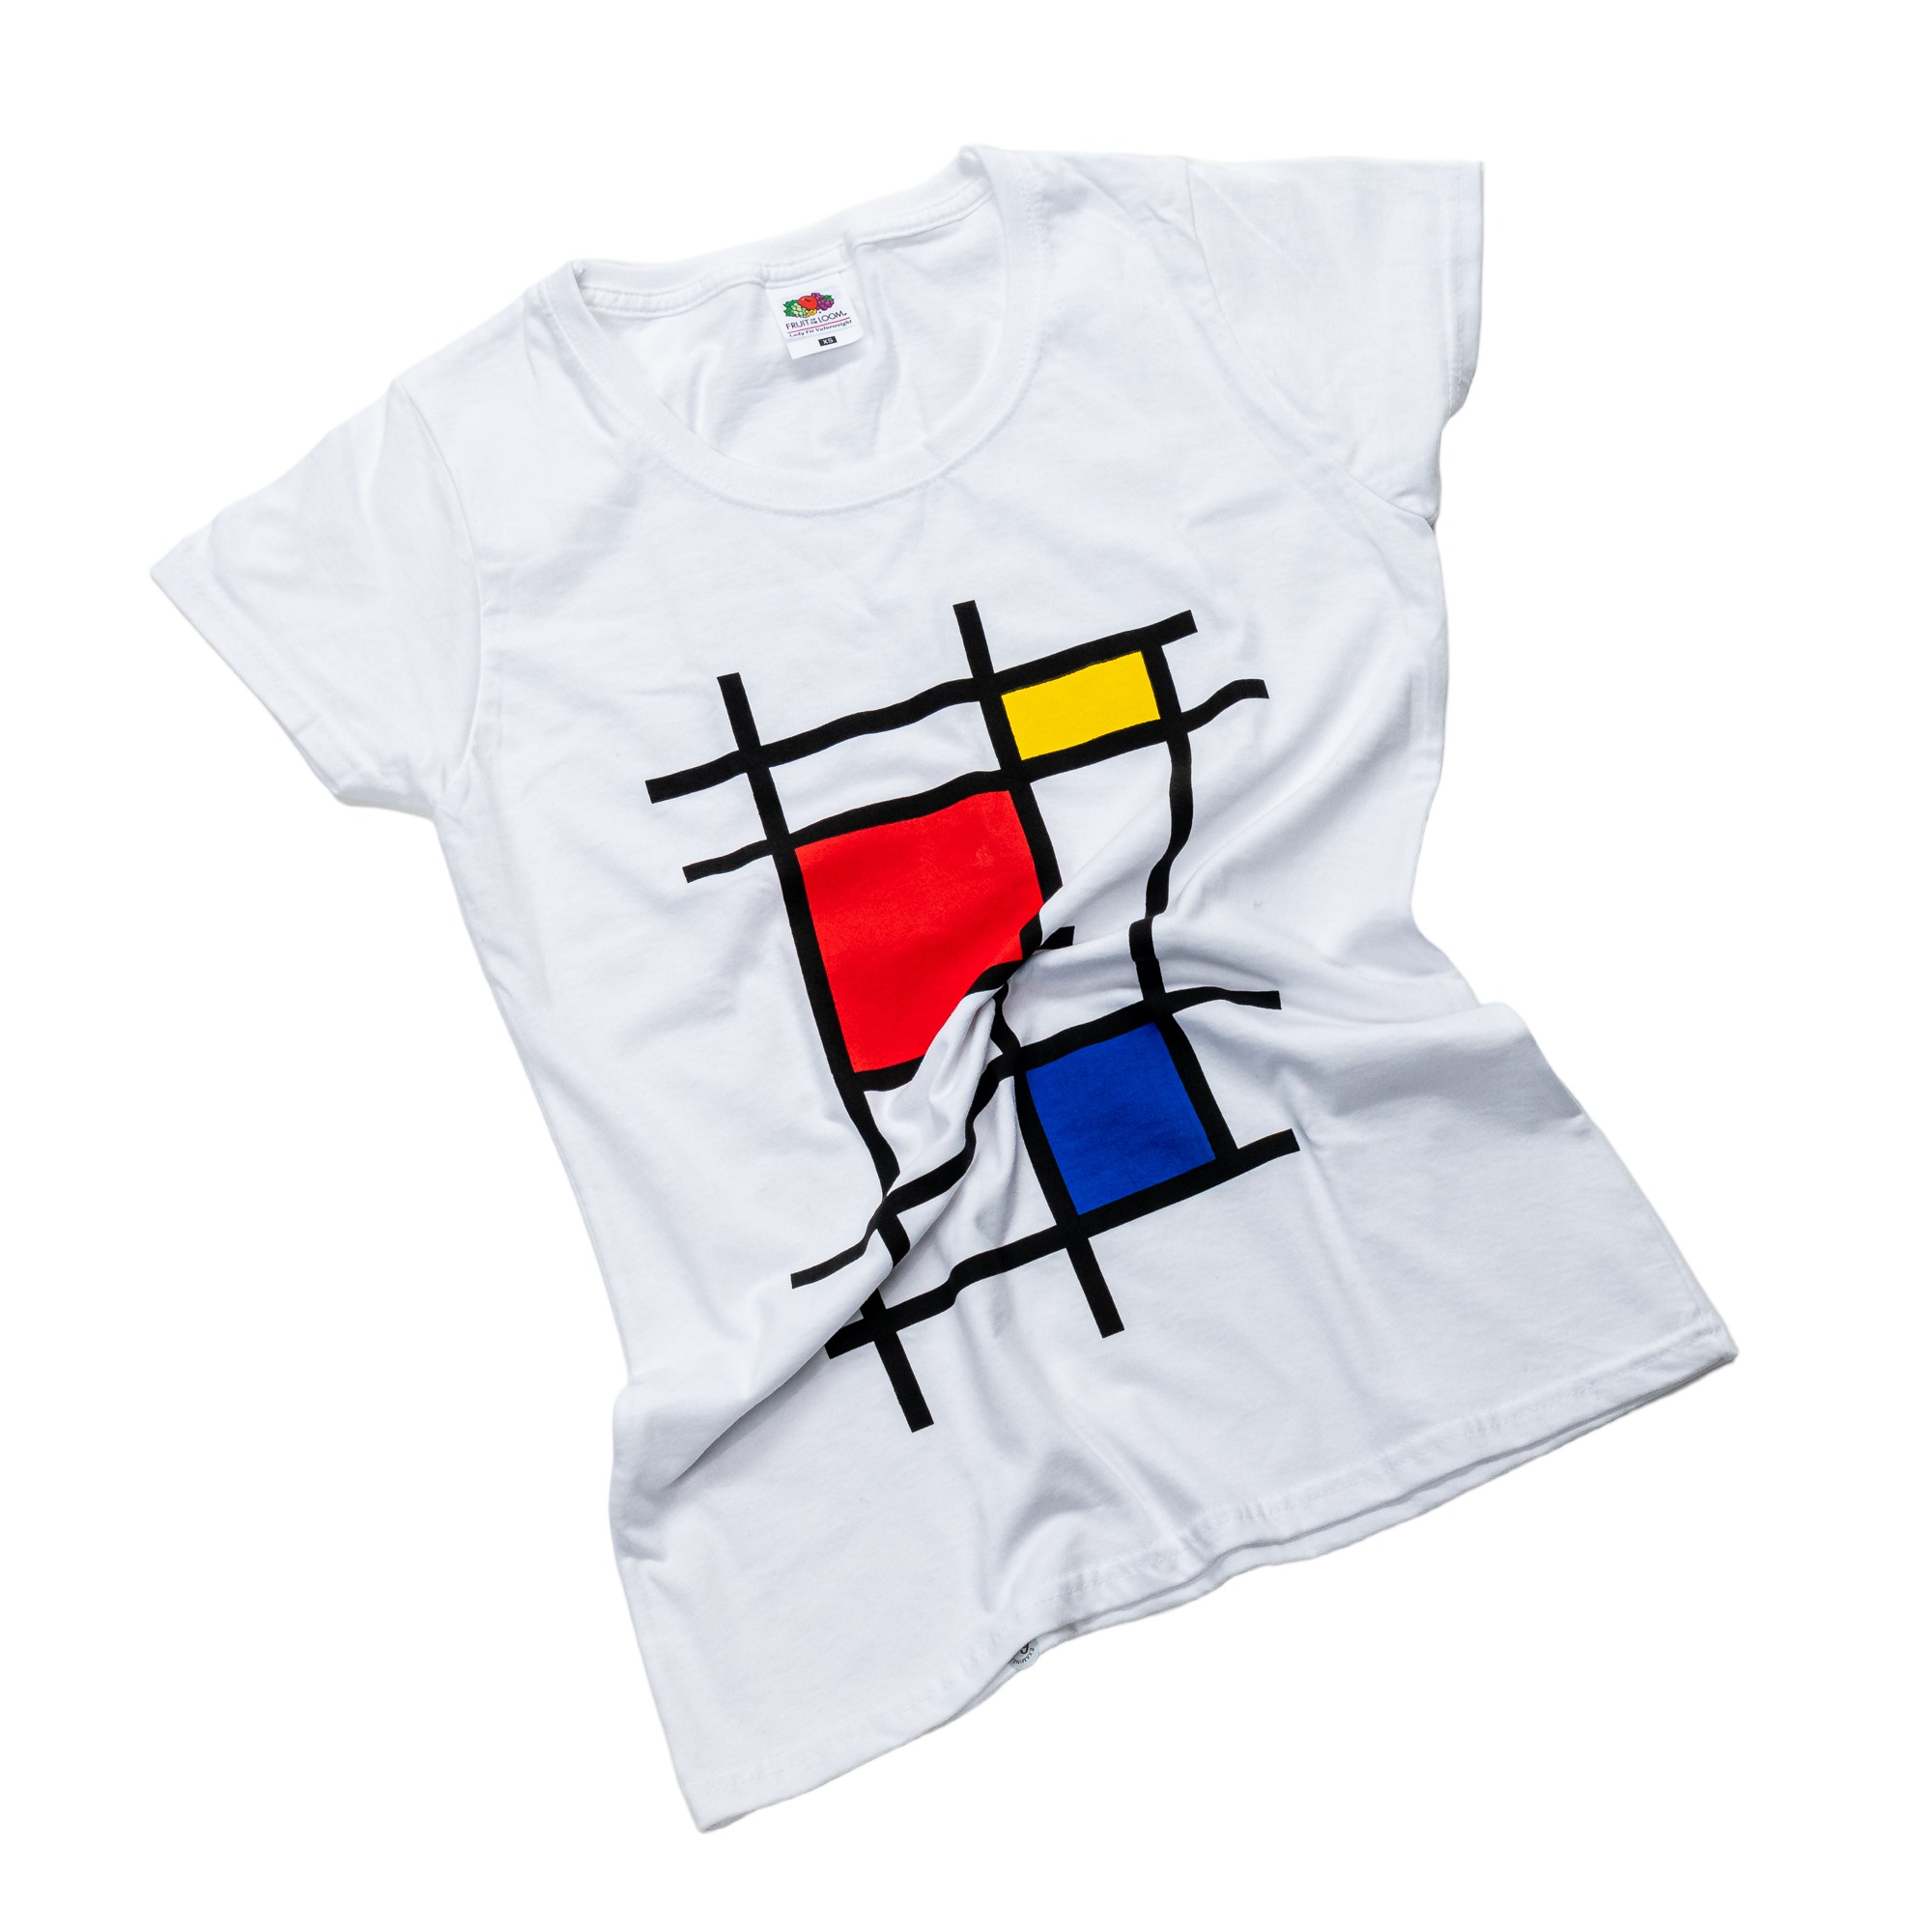 T-shirt white - Mondriaanhuis - Dutch Museum Shop